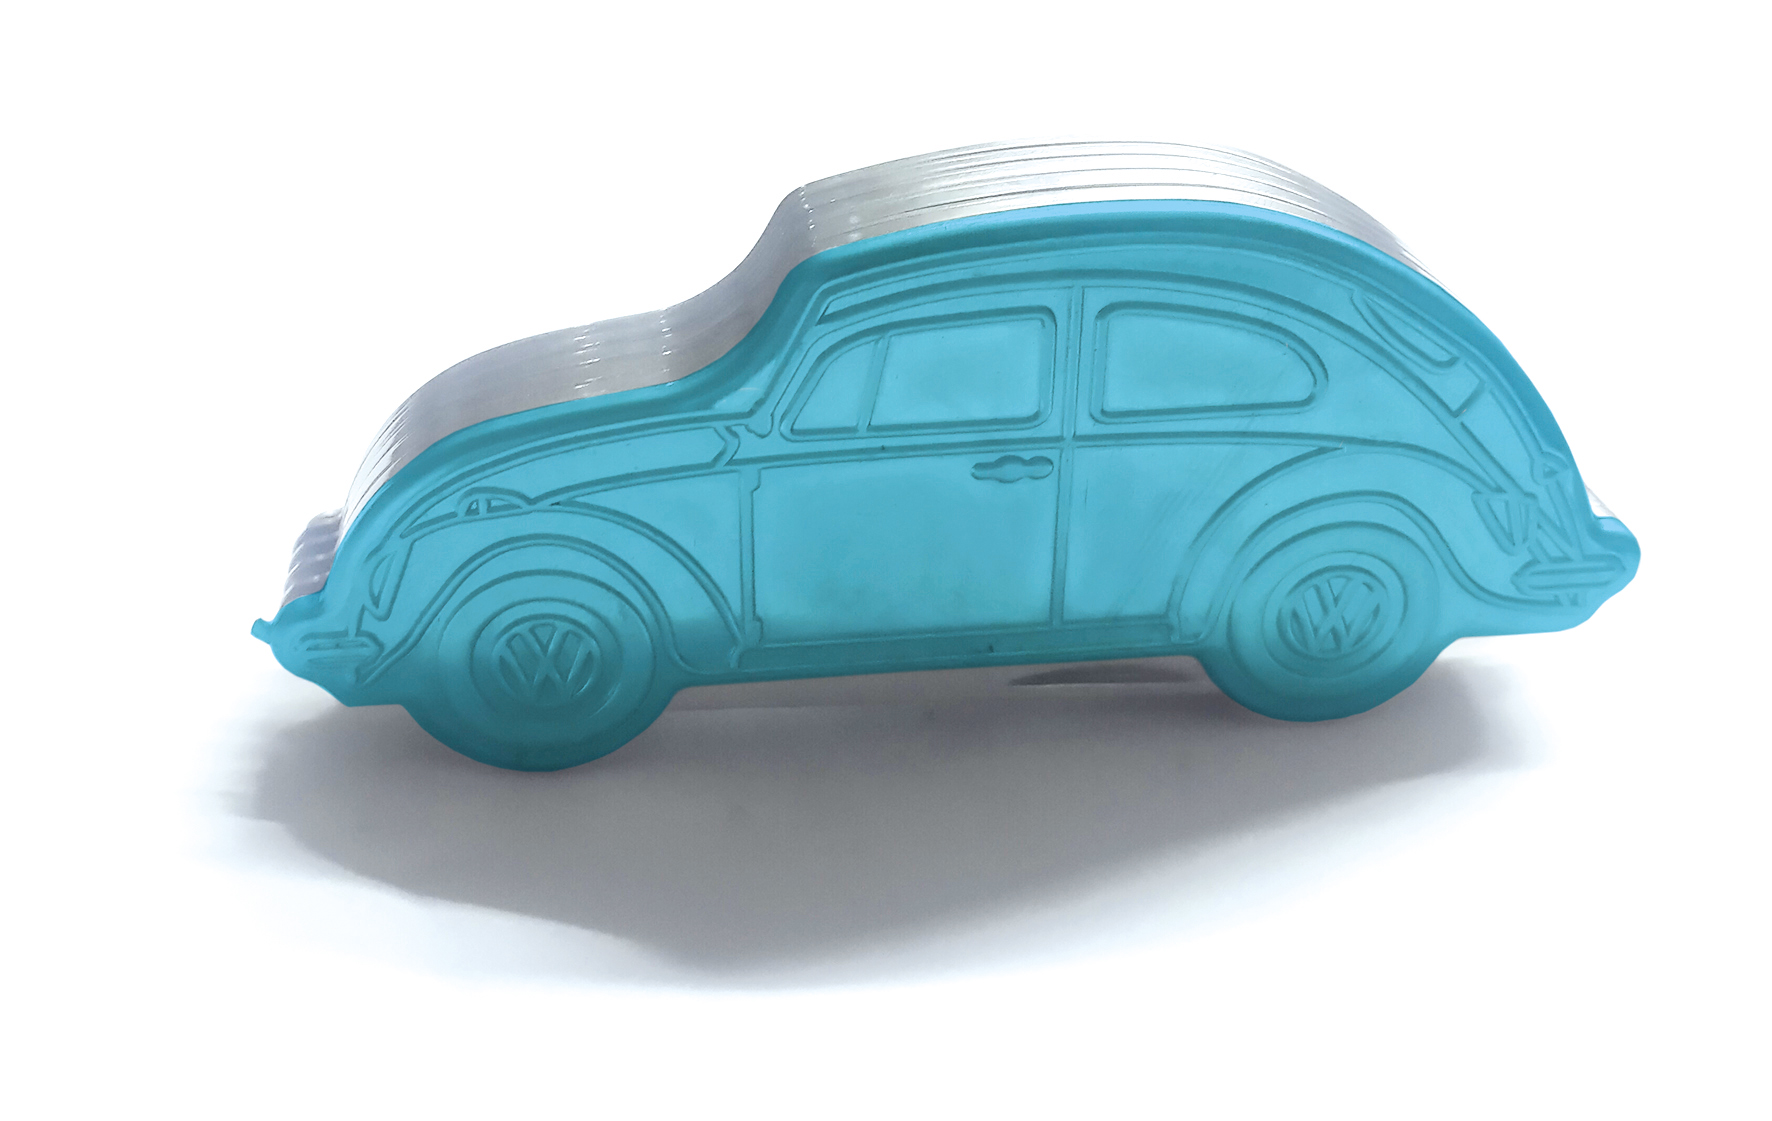 Navaja de bolsillo VW Beetle 3D en caja de regalo - azul